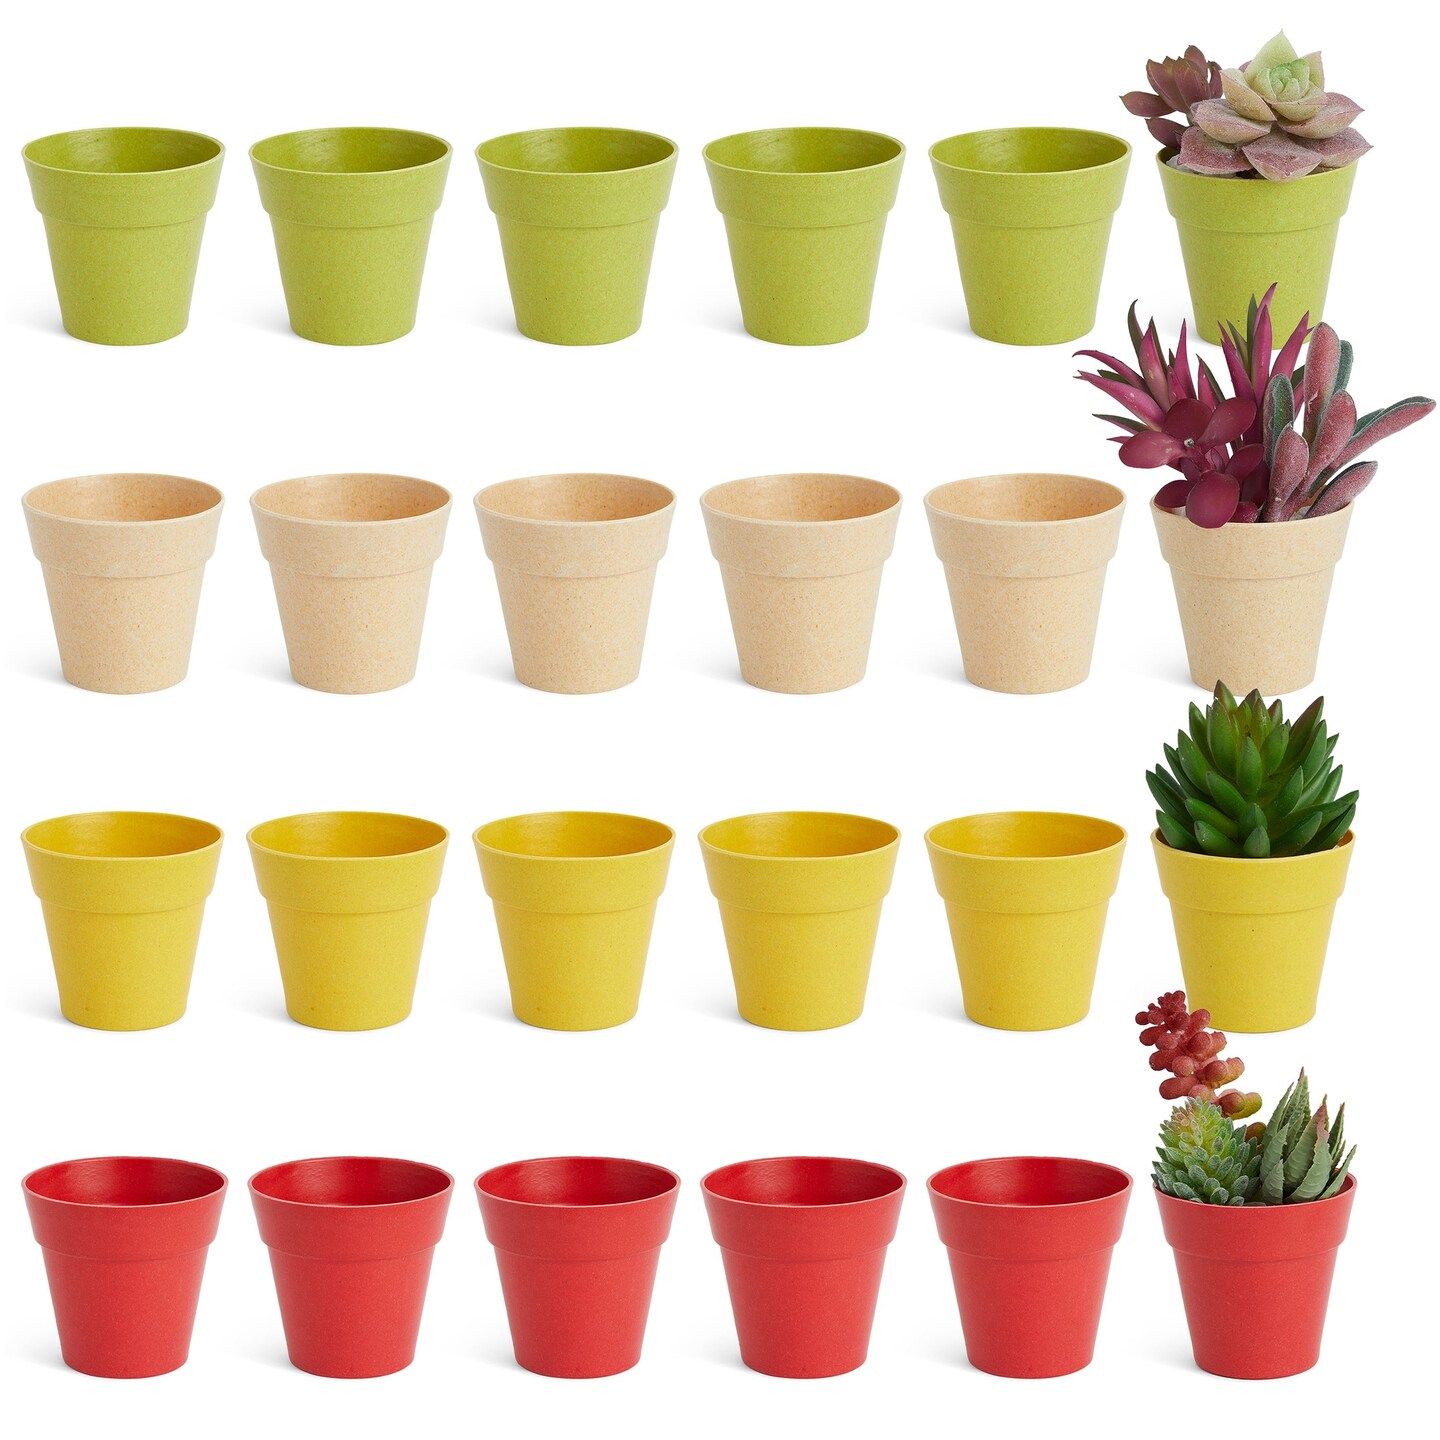 24 Pack Tiny Plastic Pots for Plants 1.5 Inch, Mini Planters for Flowers, Succulents (4 Colors)